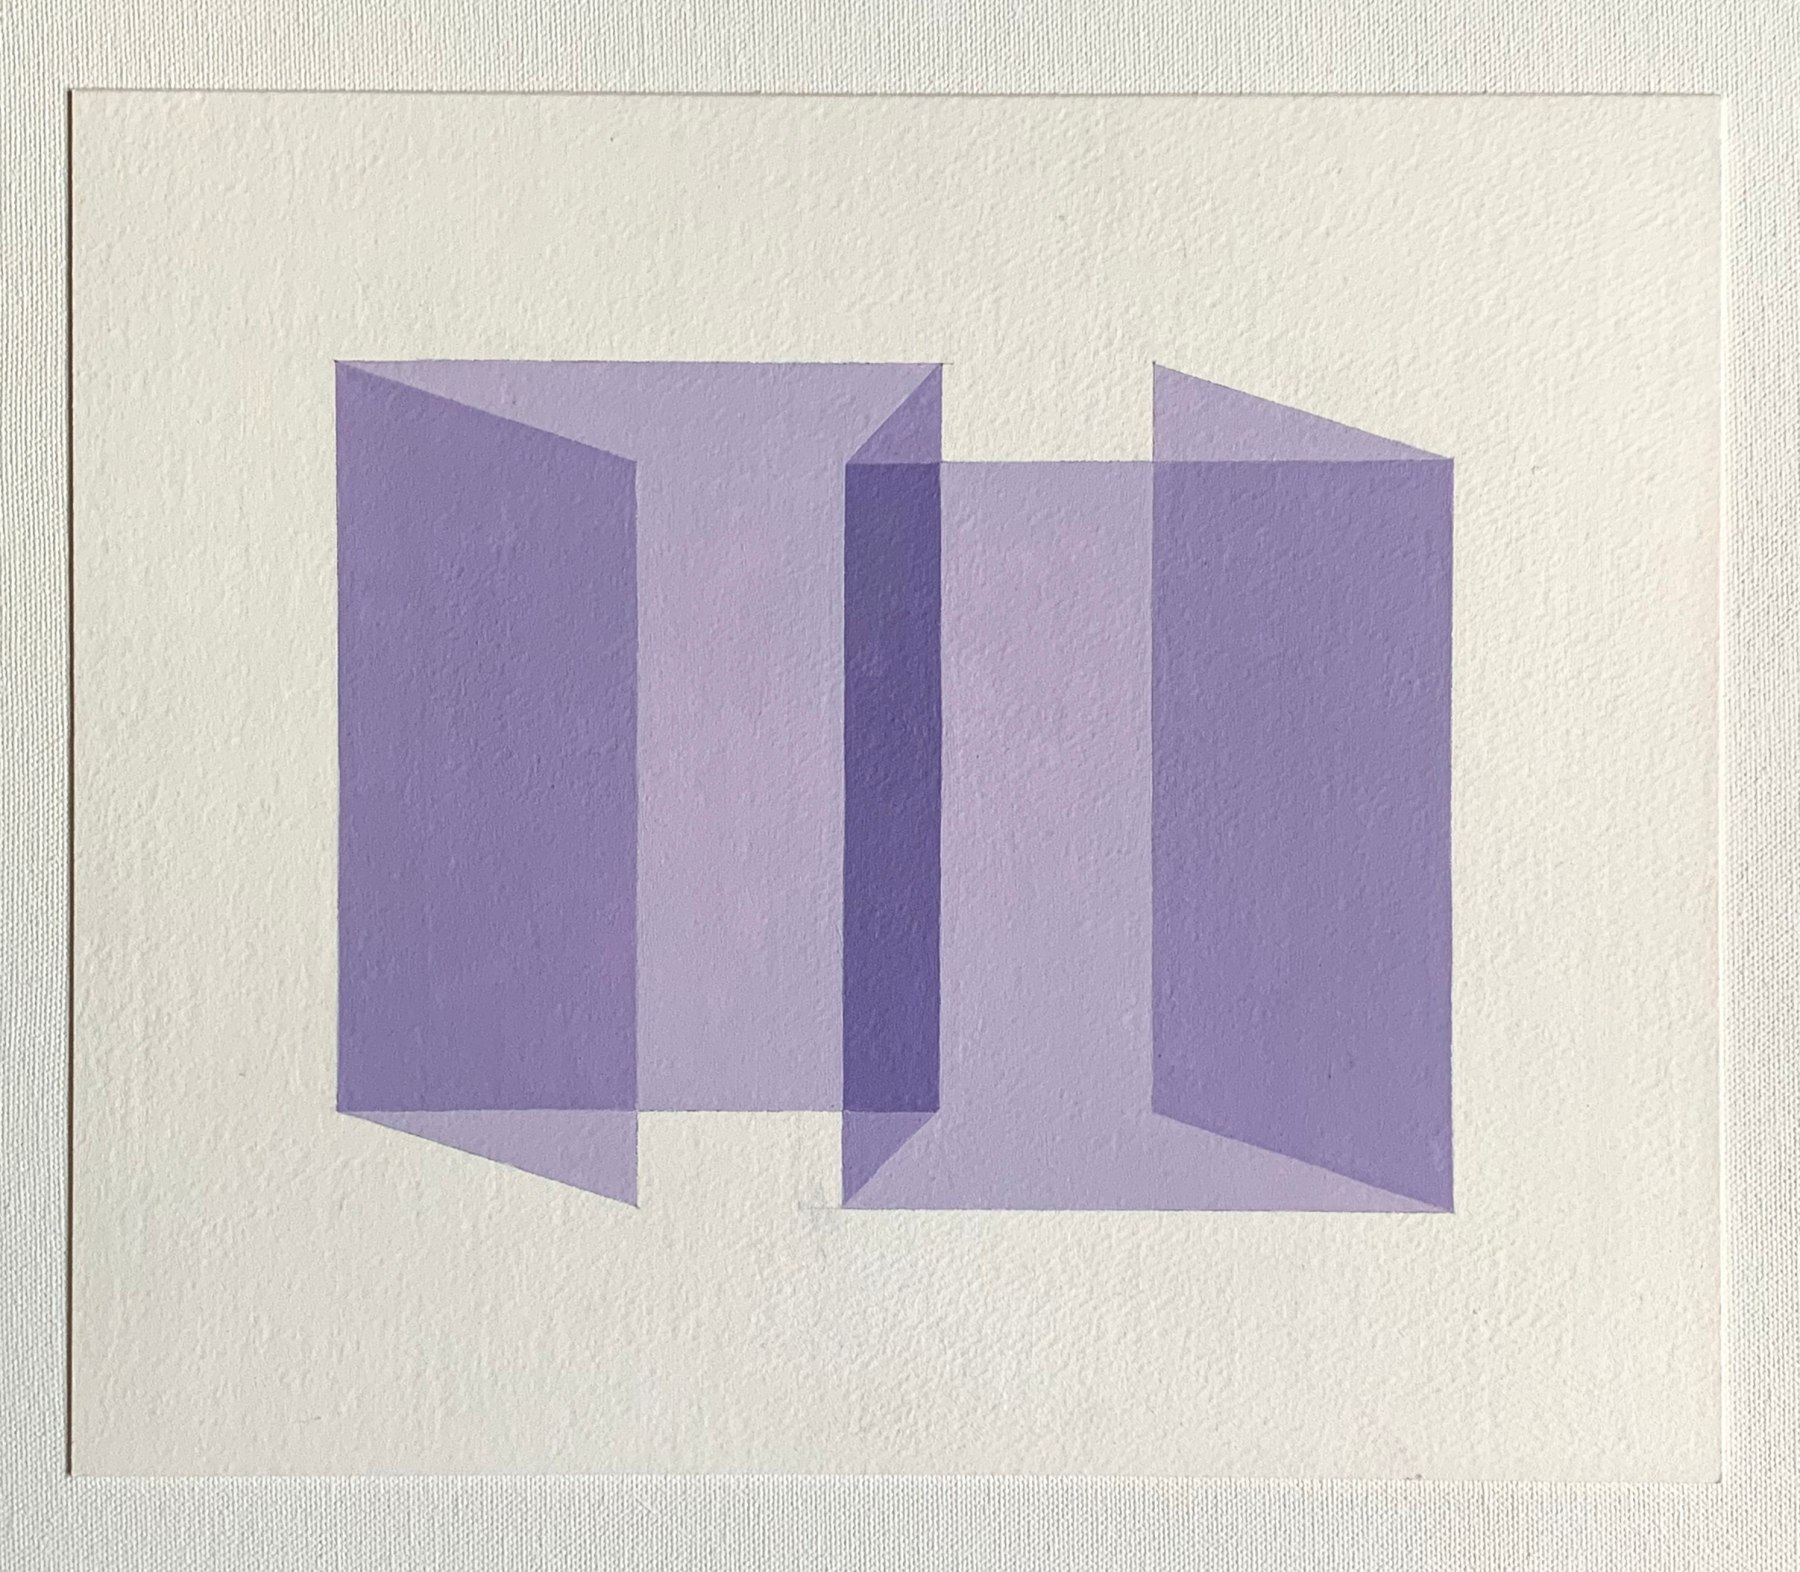 Ralston Fox Smith  Limbo, 2020  Oil on paper  10 1/2h x 12 1/2w in 26.67h x 31.75w cm  RFS_025  $ 400.00, geometric illusion, lavender shape on white plane